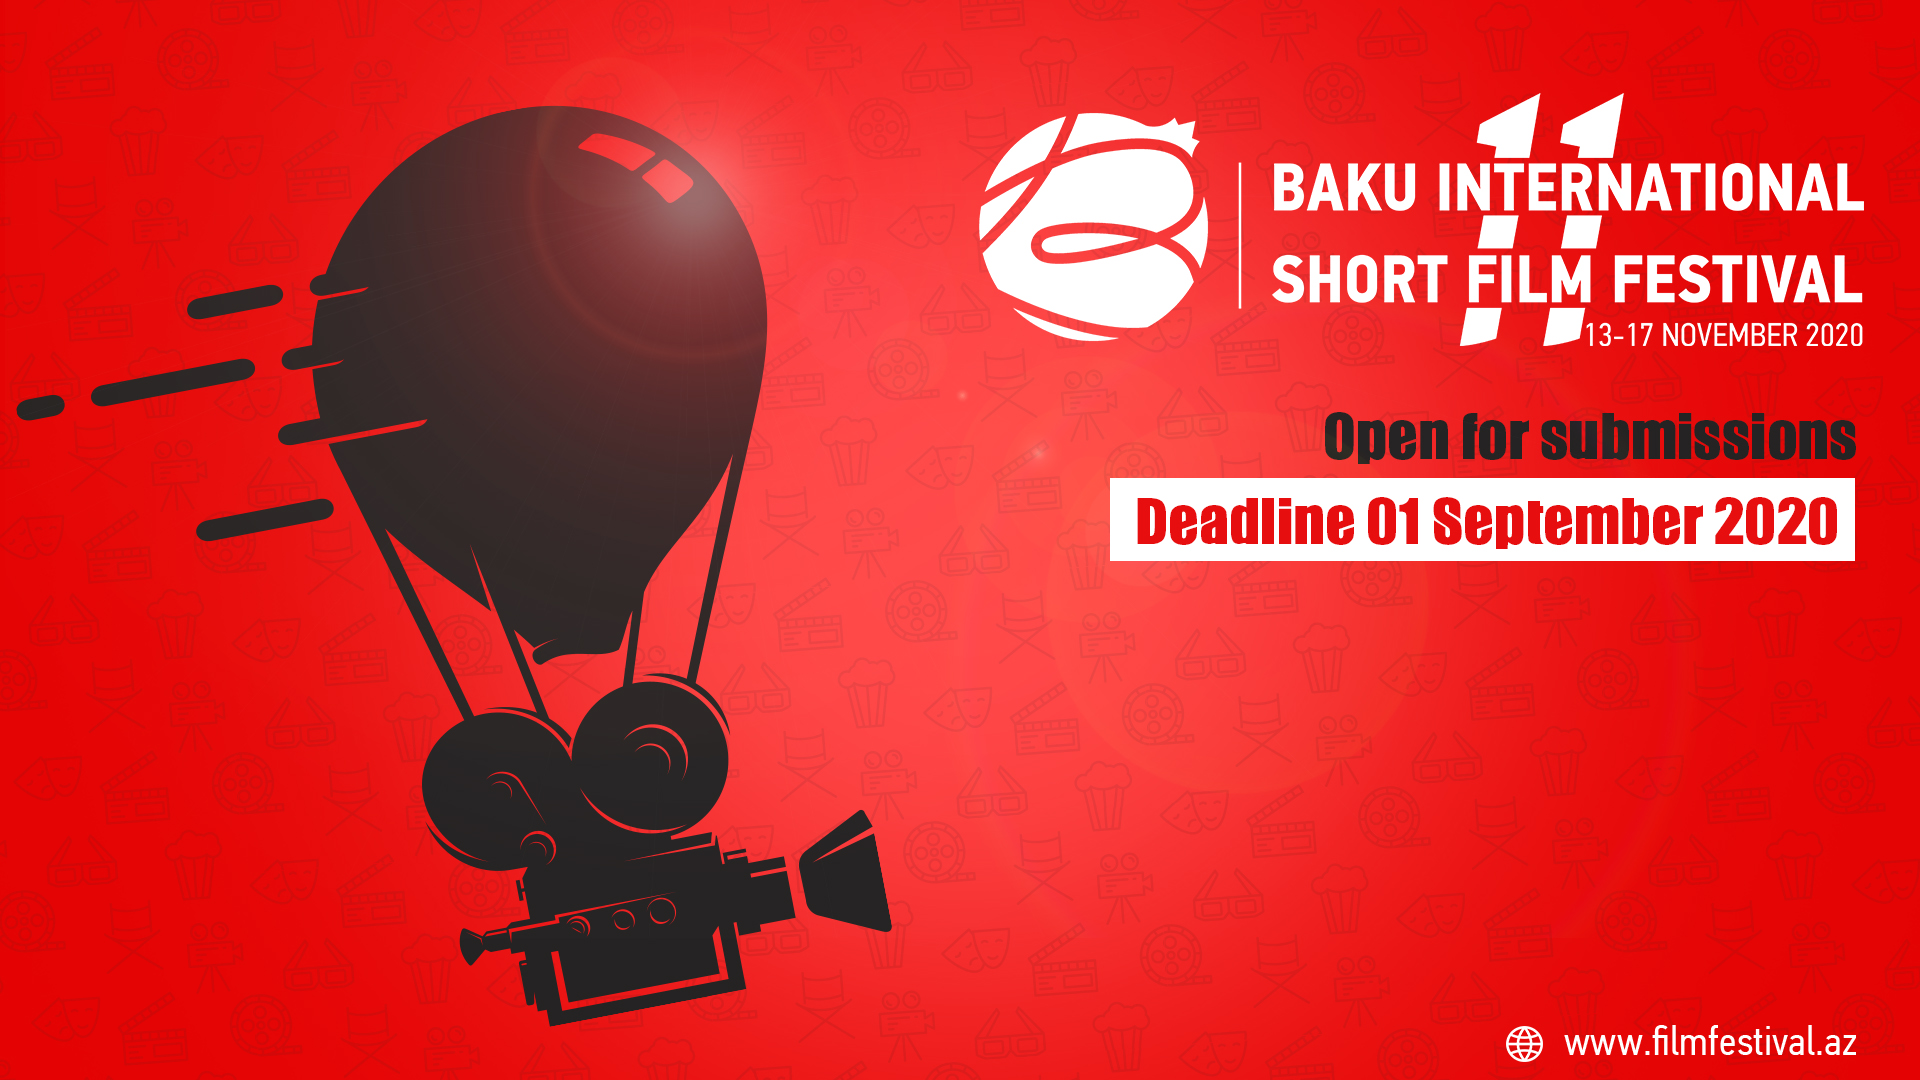 Baku International Short Film Festival calls for talents